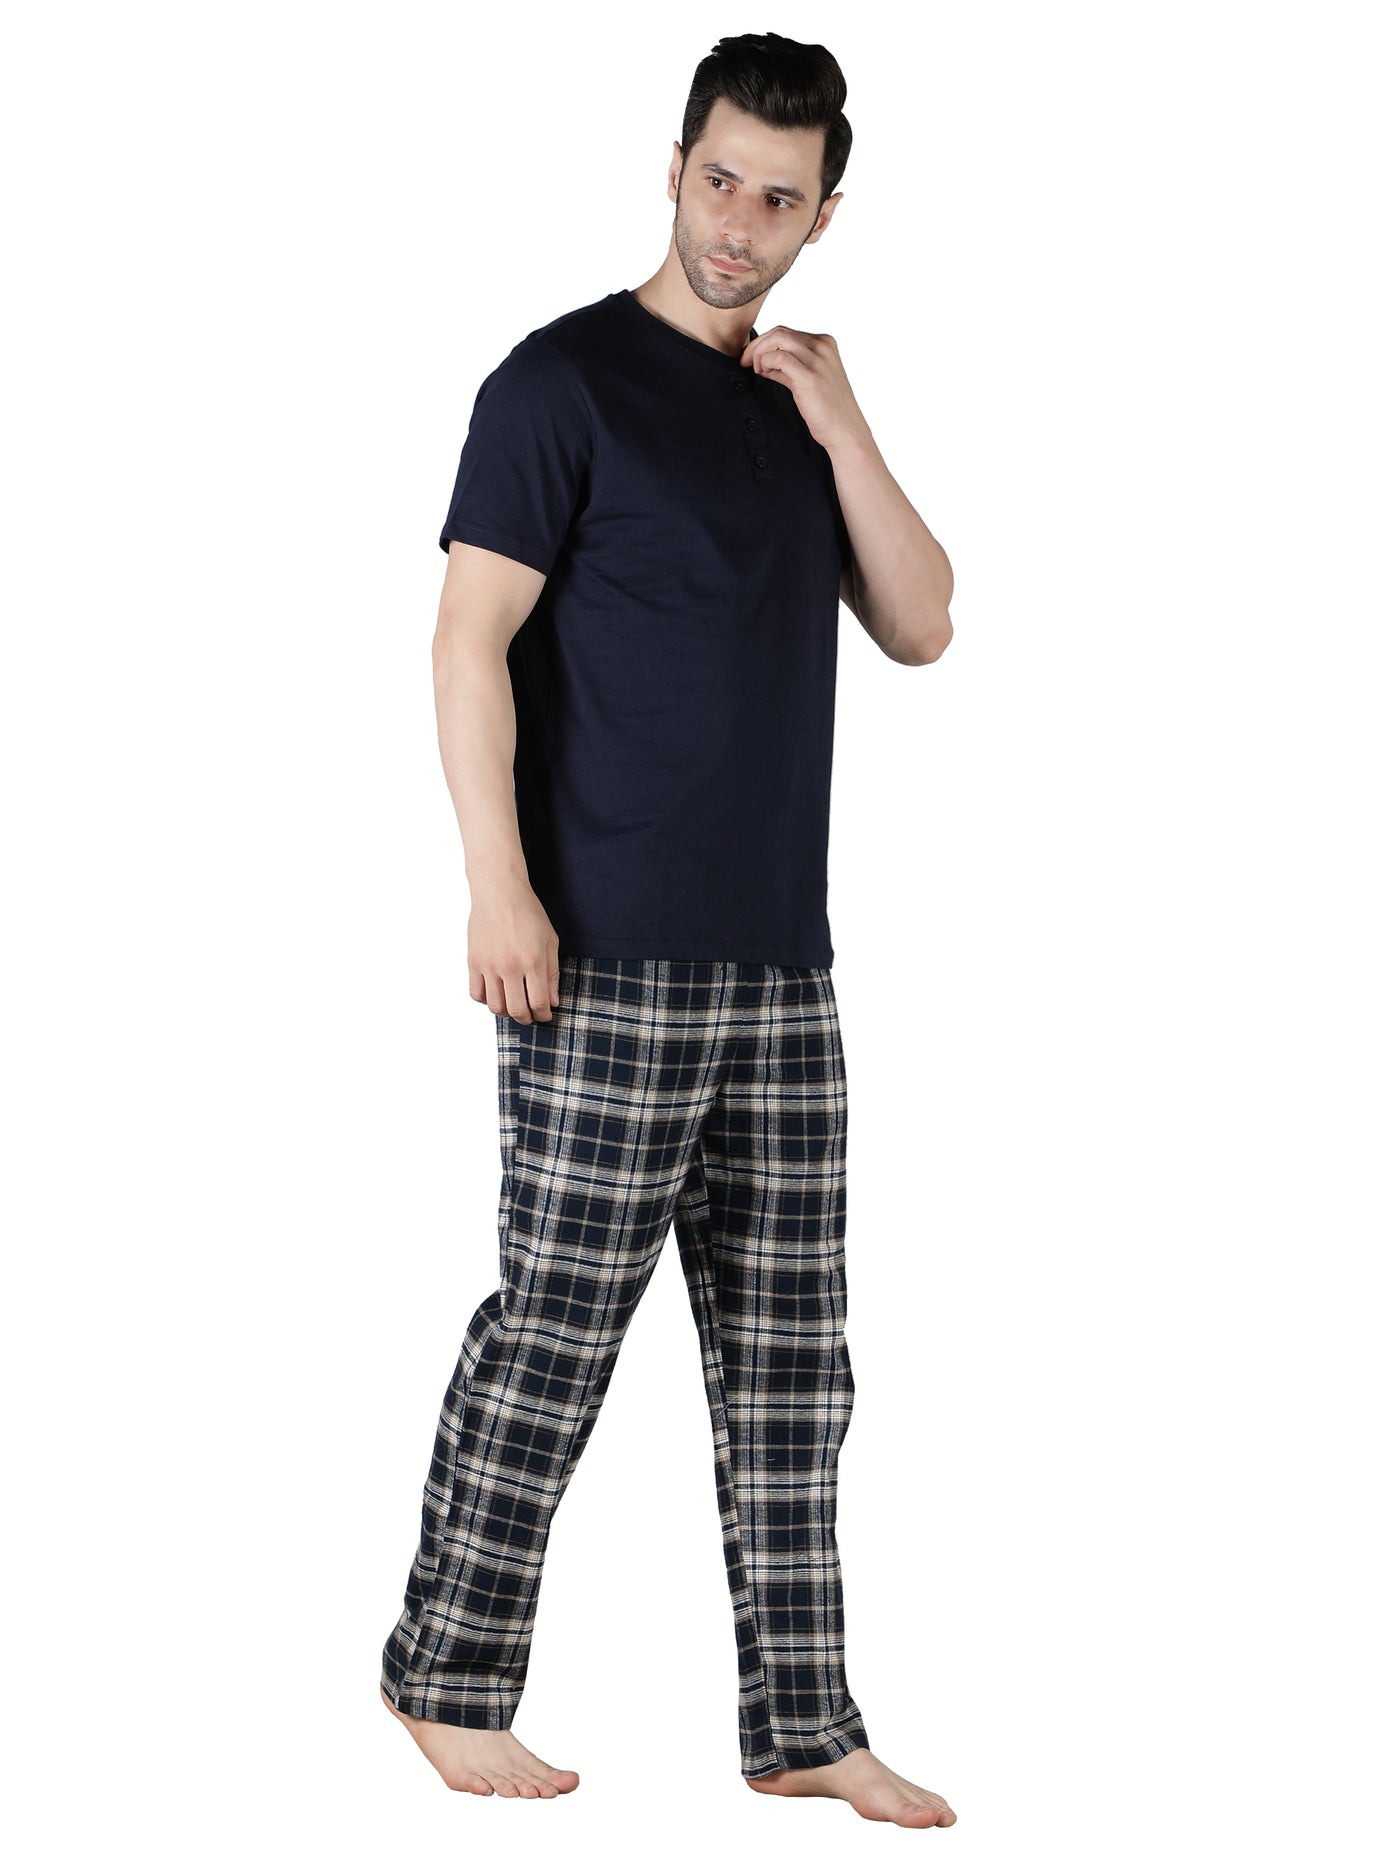 Pyjama Set for Men-Navy Checks